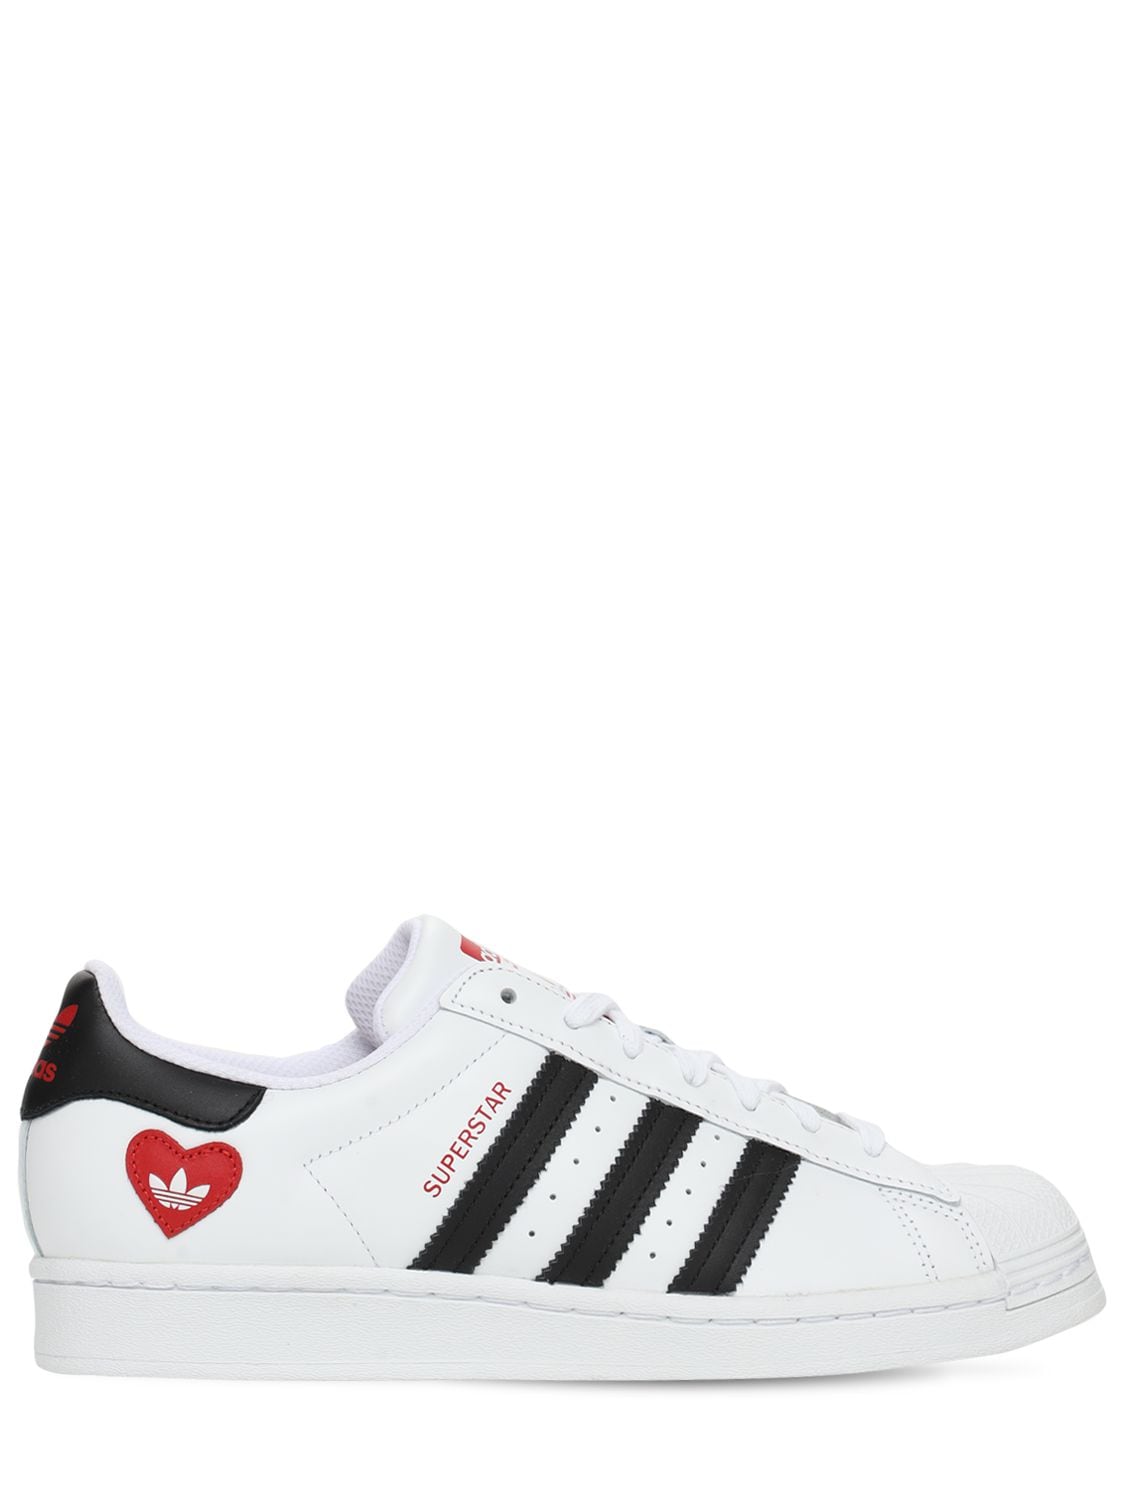 Adidas Originals Valentines Day Superstar Sneakers In White